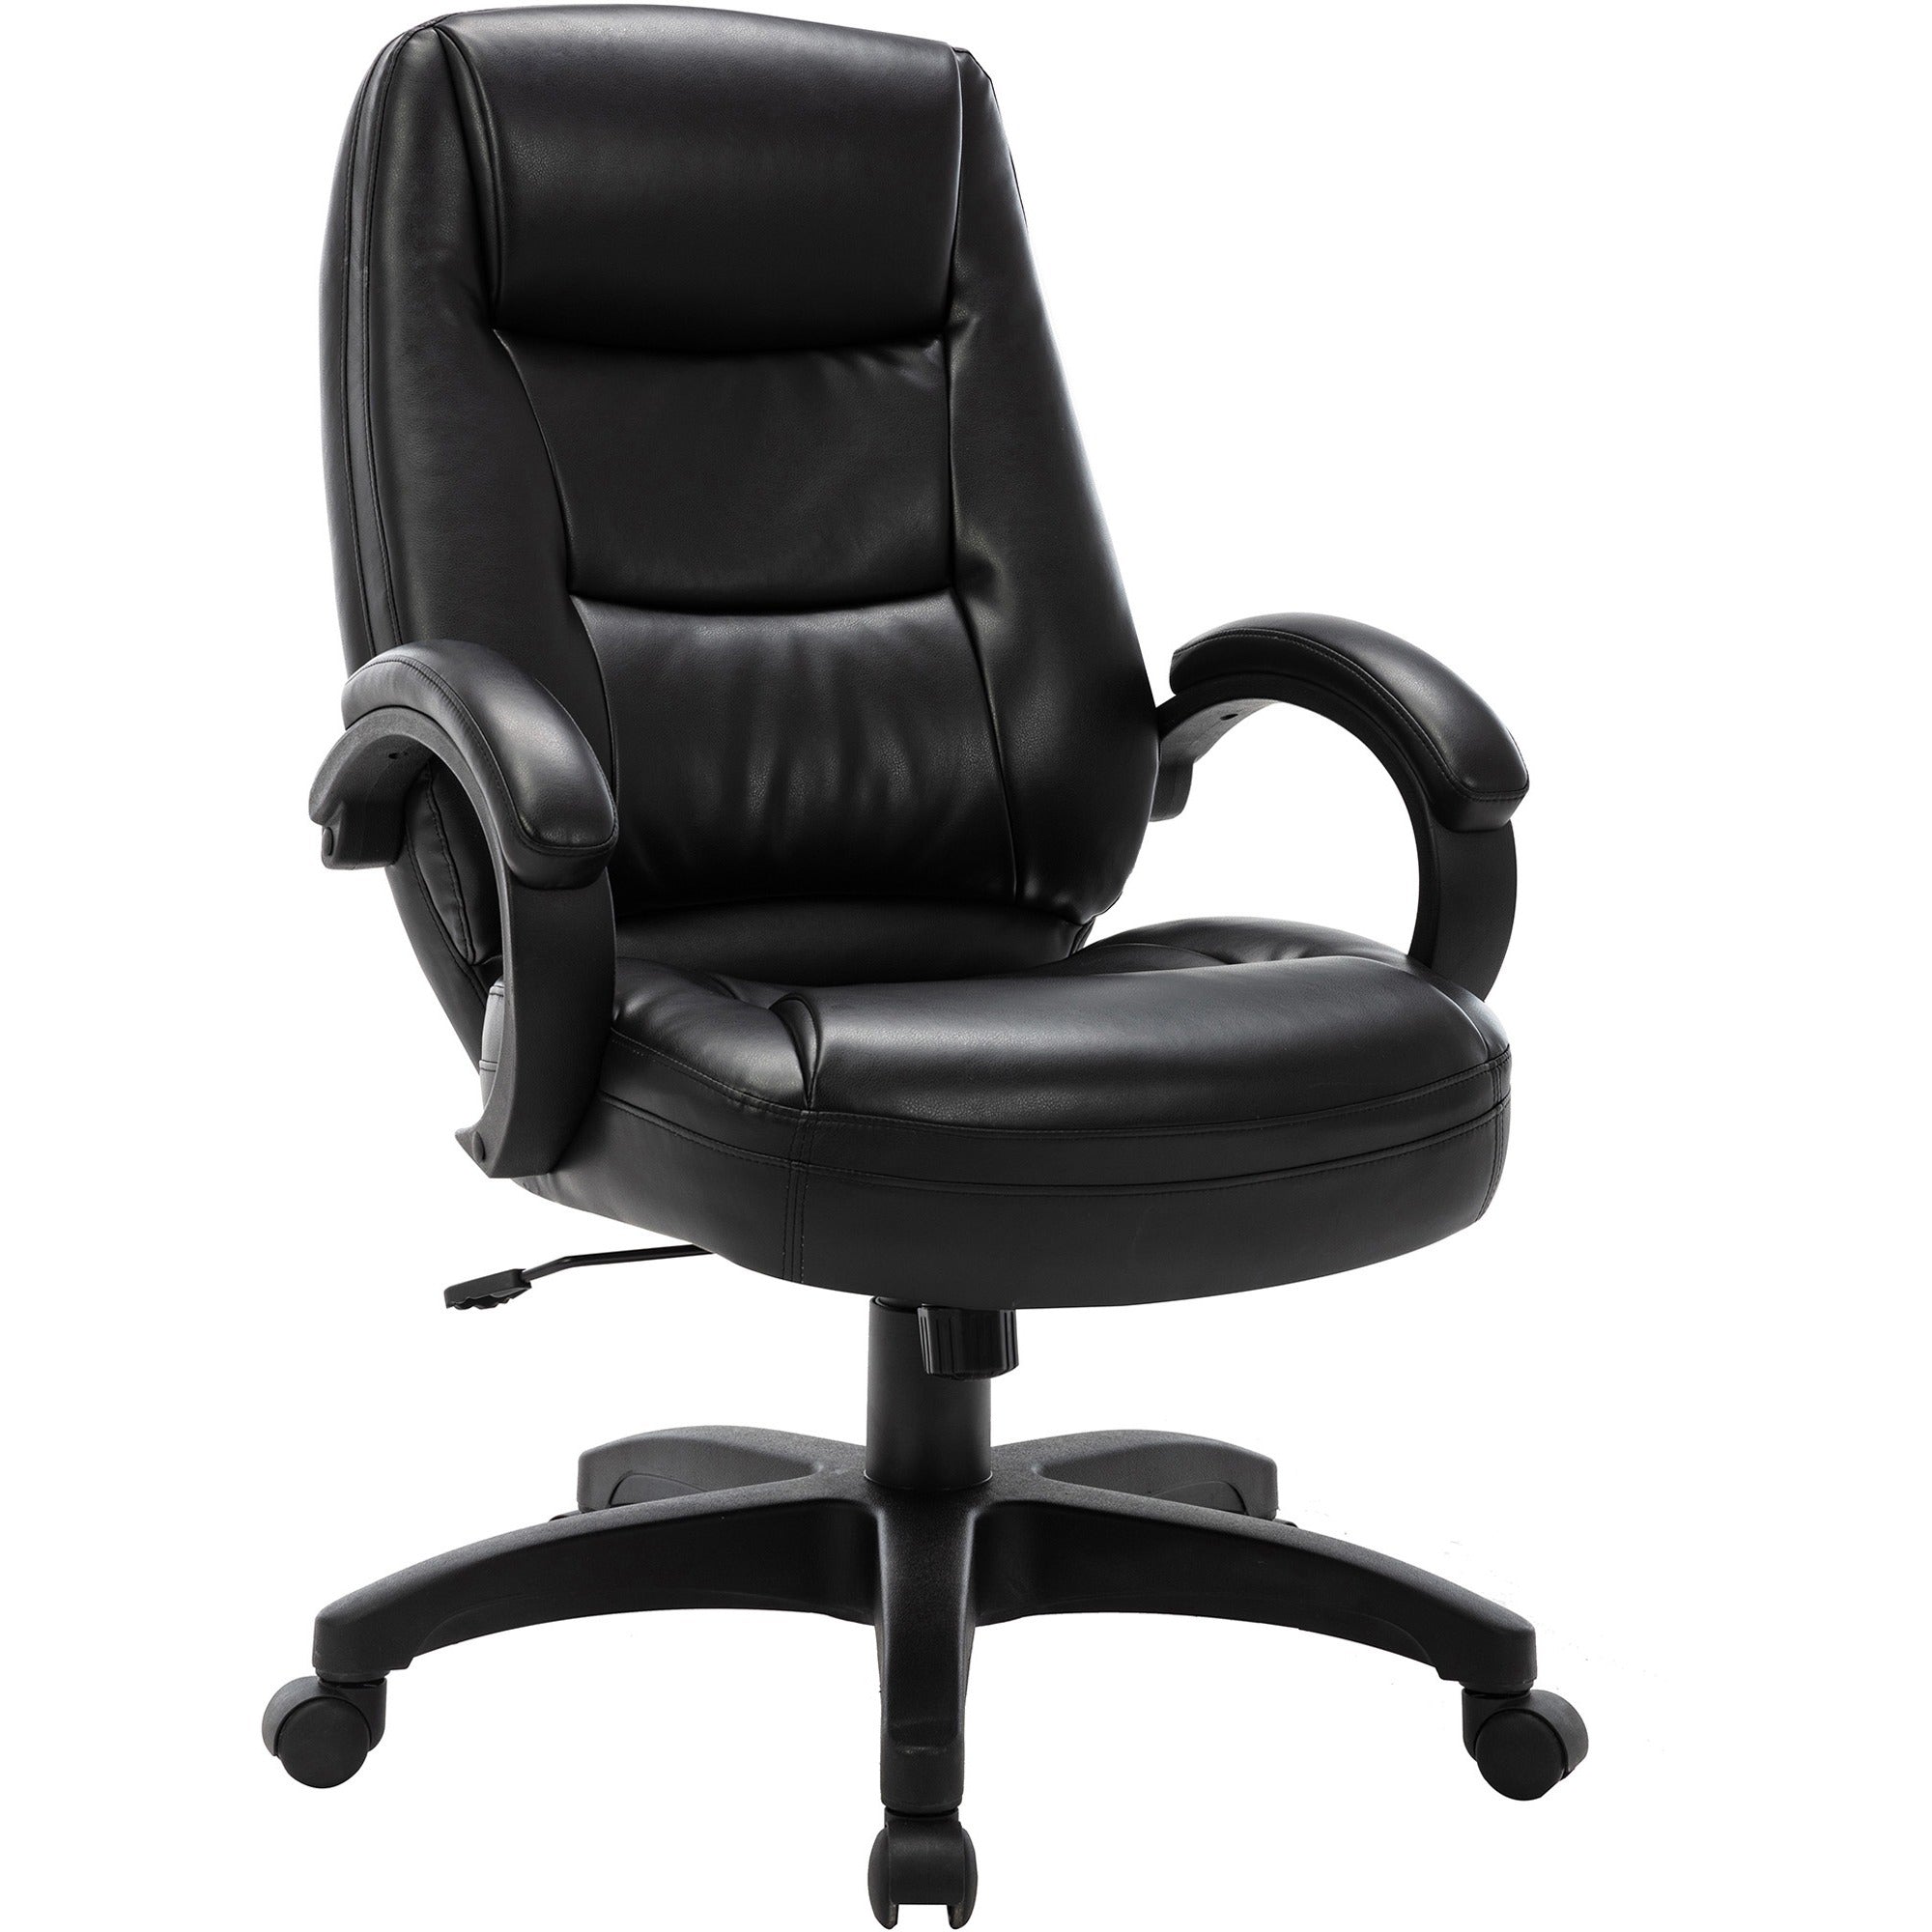 Lorell Westlake Series Executive High-Back Chair - Black Leather Seat - Black Polyurethane Frame - High Back - Black - 1 Each - 